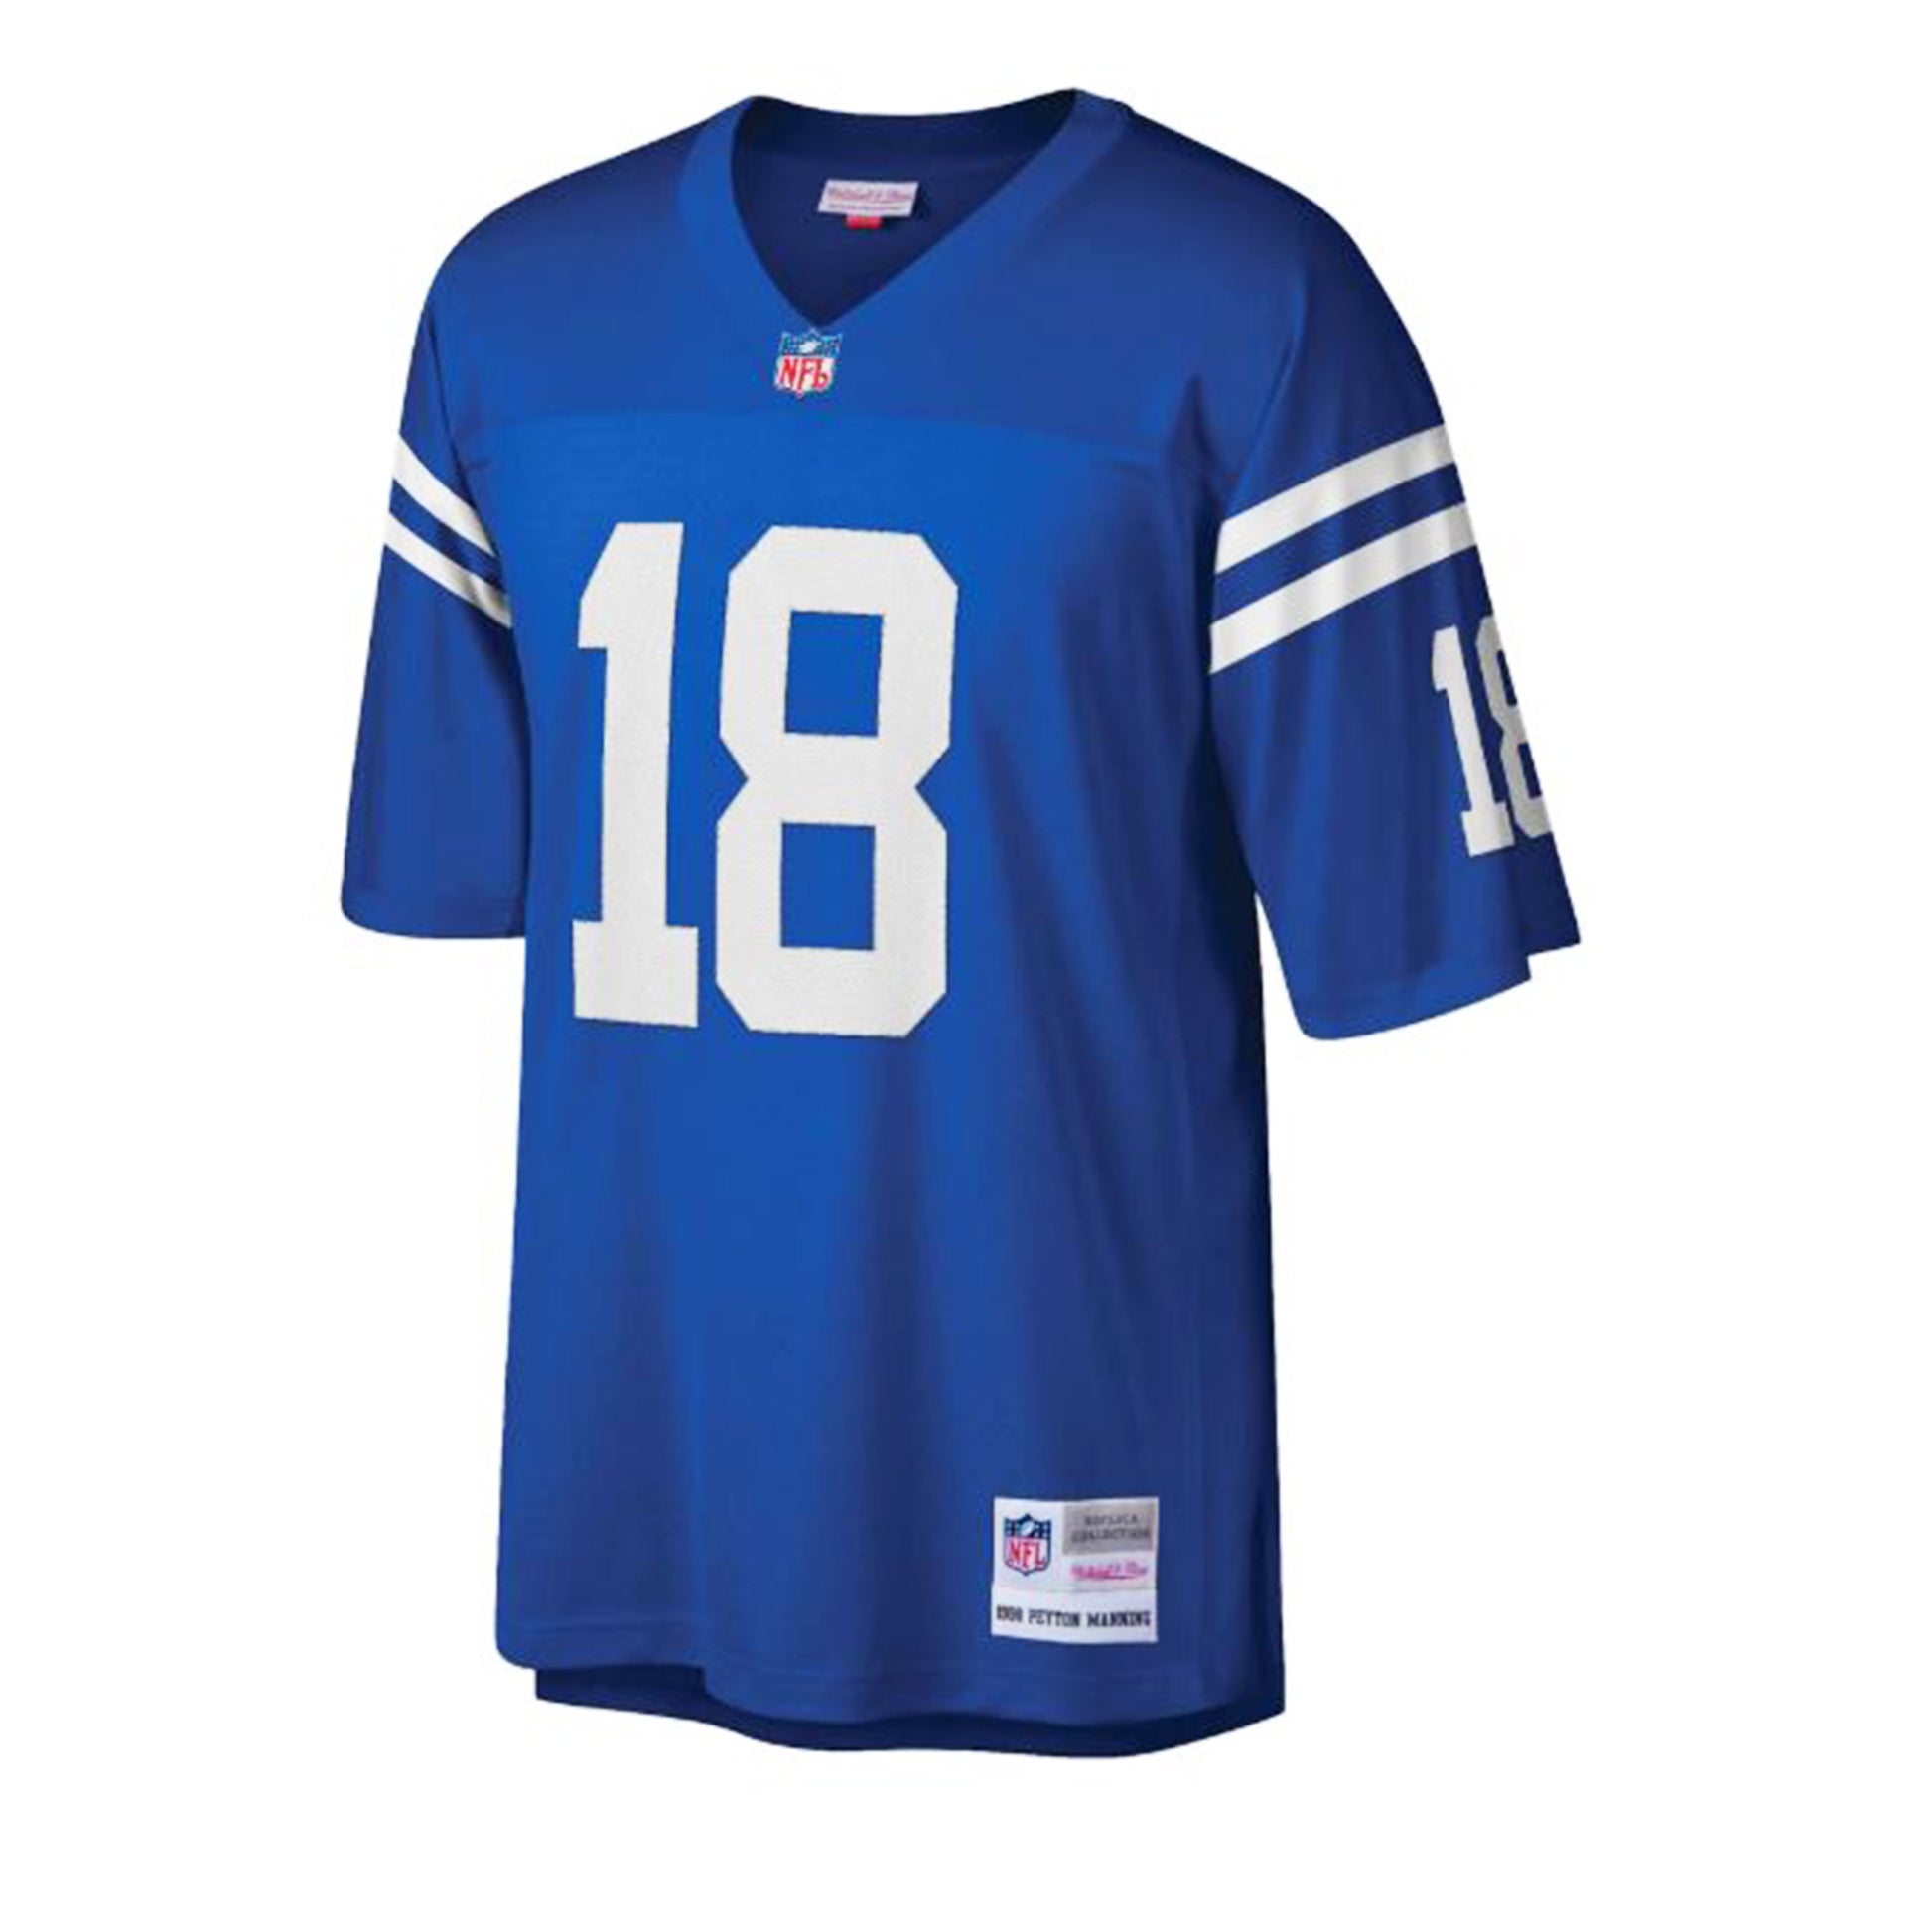 Peyton Manning Colts #18 Reebok NFL Players Football Jersey Adult Medium VG+